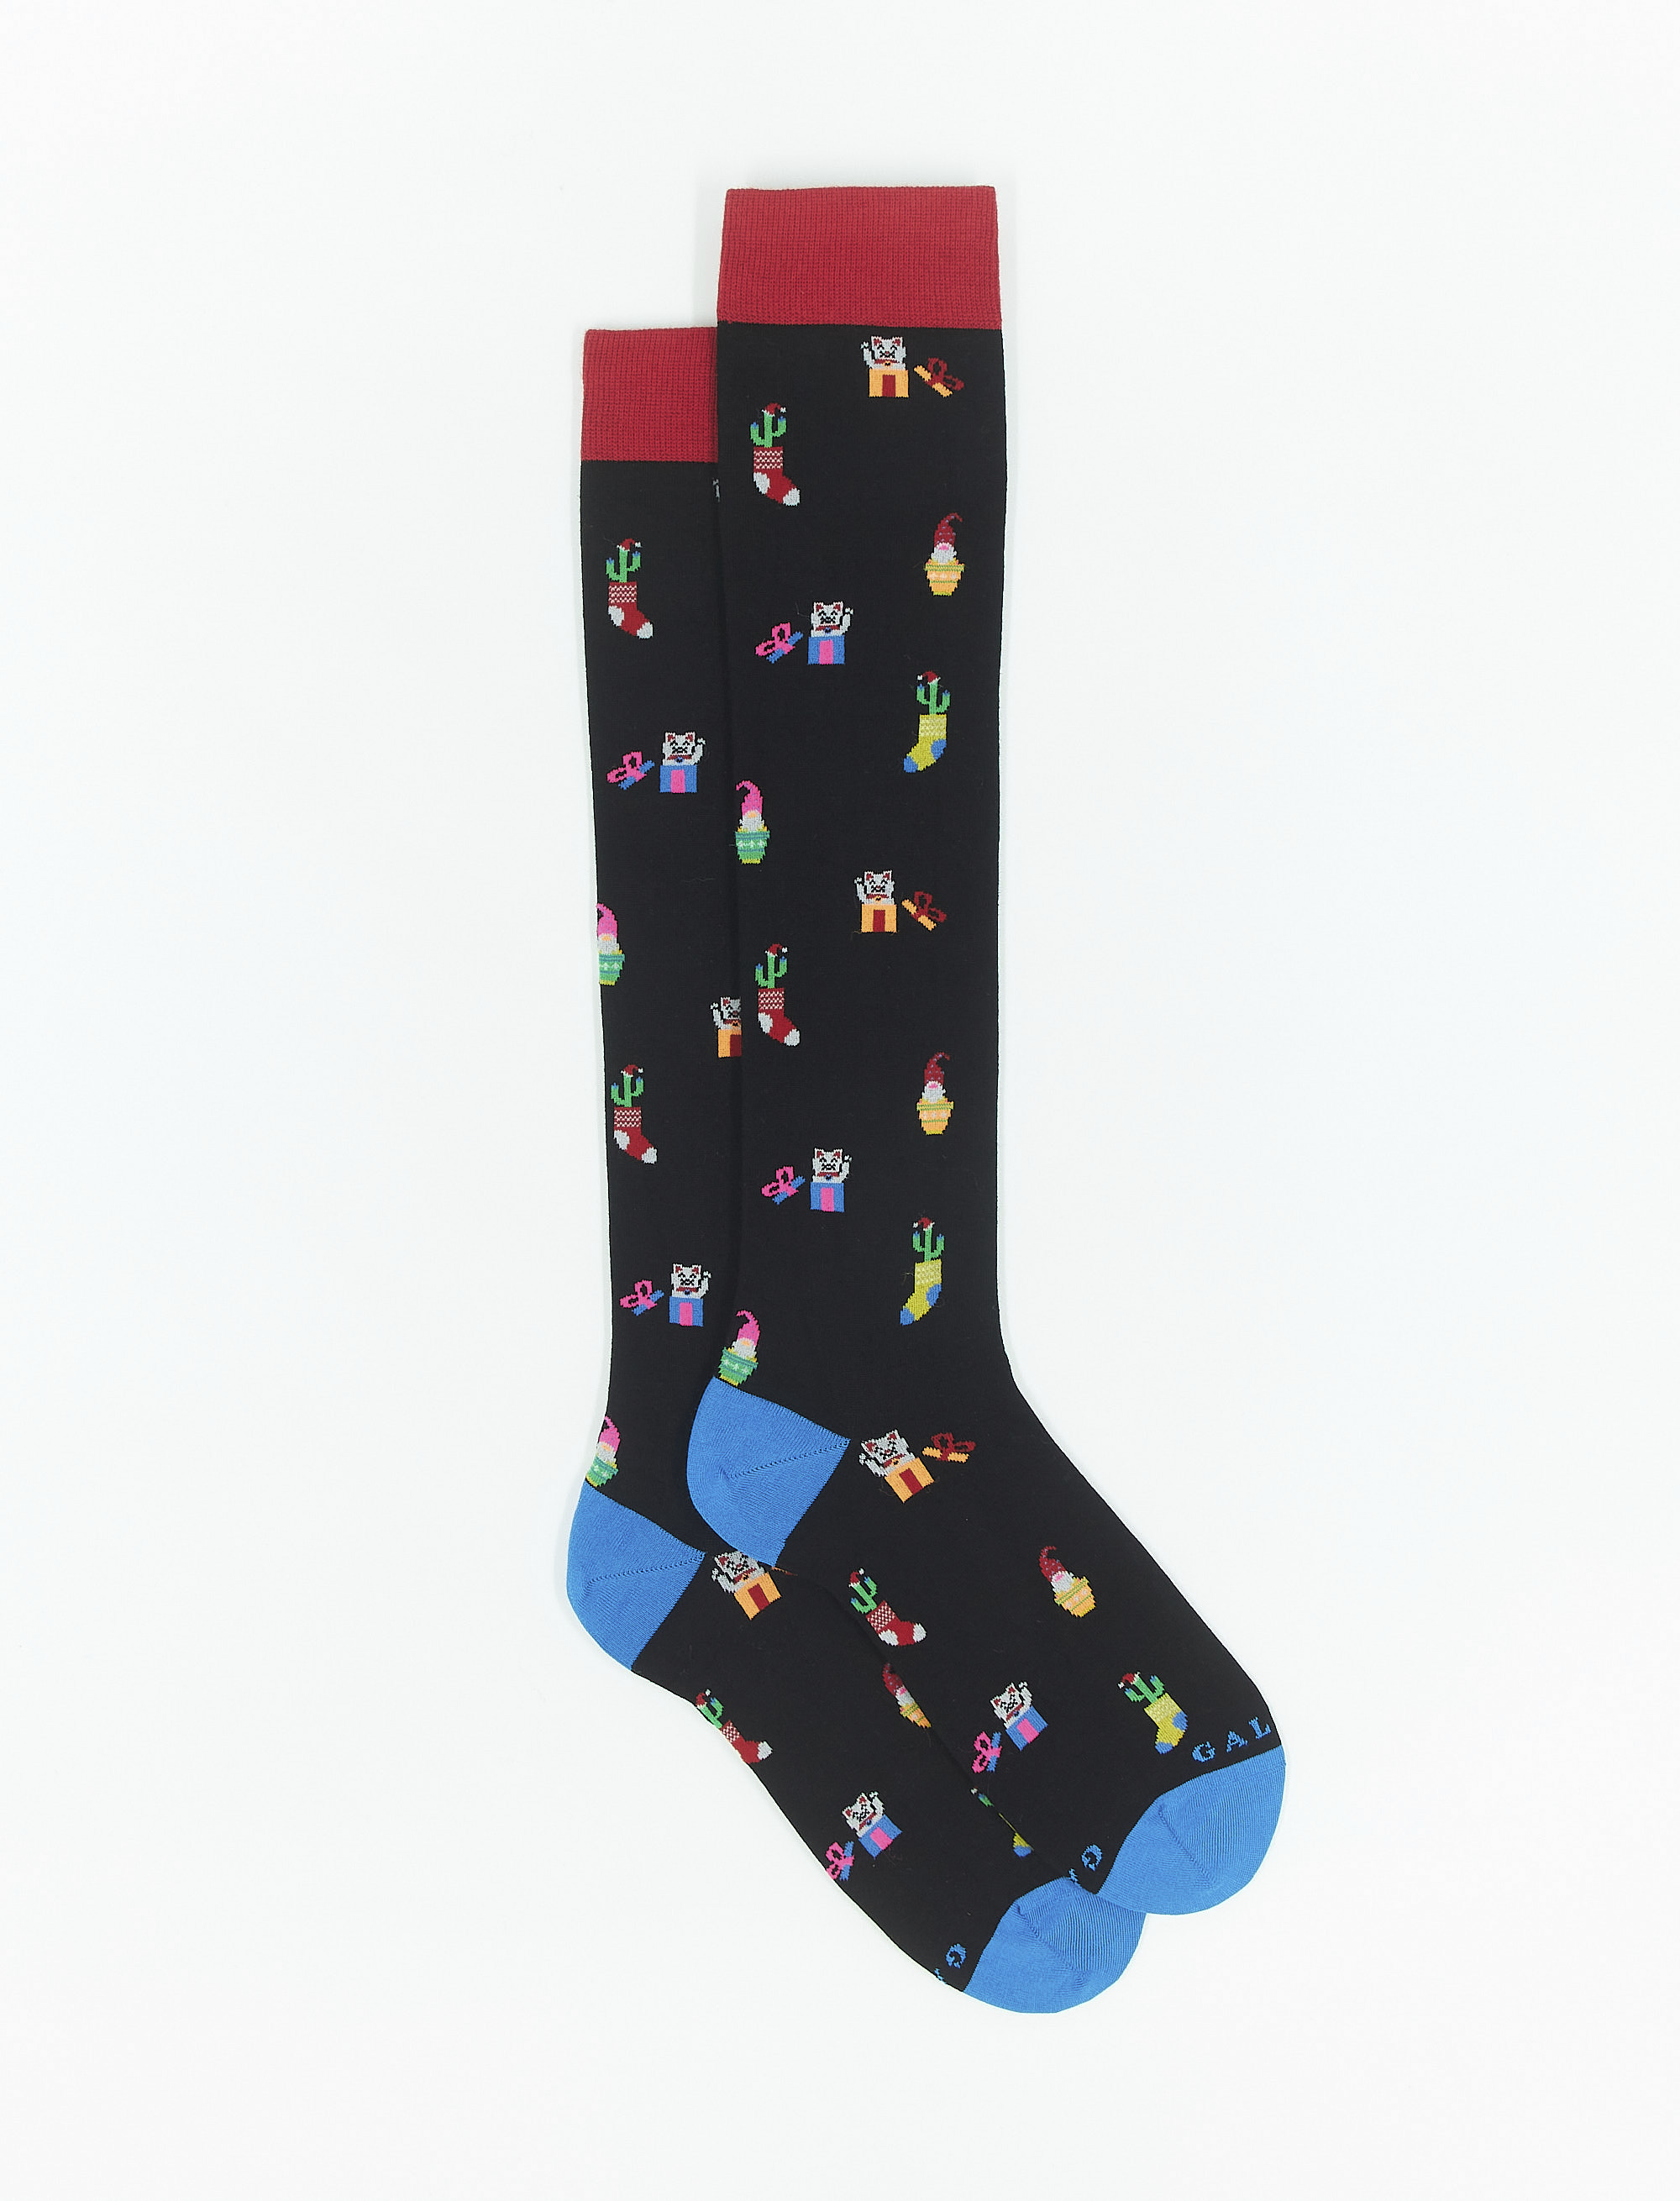 Women's long coal grey light cotton socks with Christmas motif - Long | Gallo 1927 - Official Online Shop